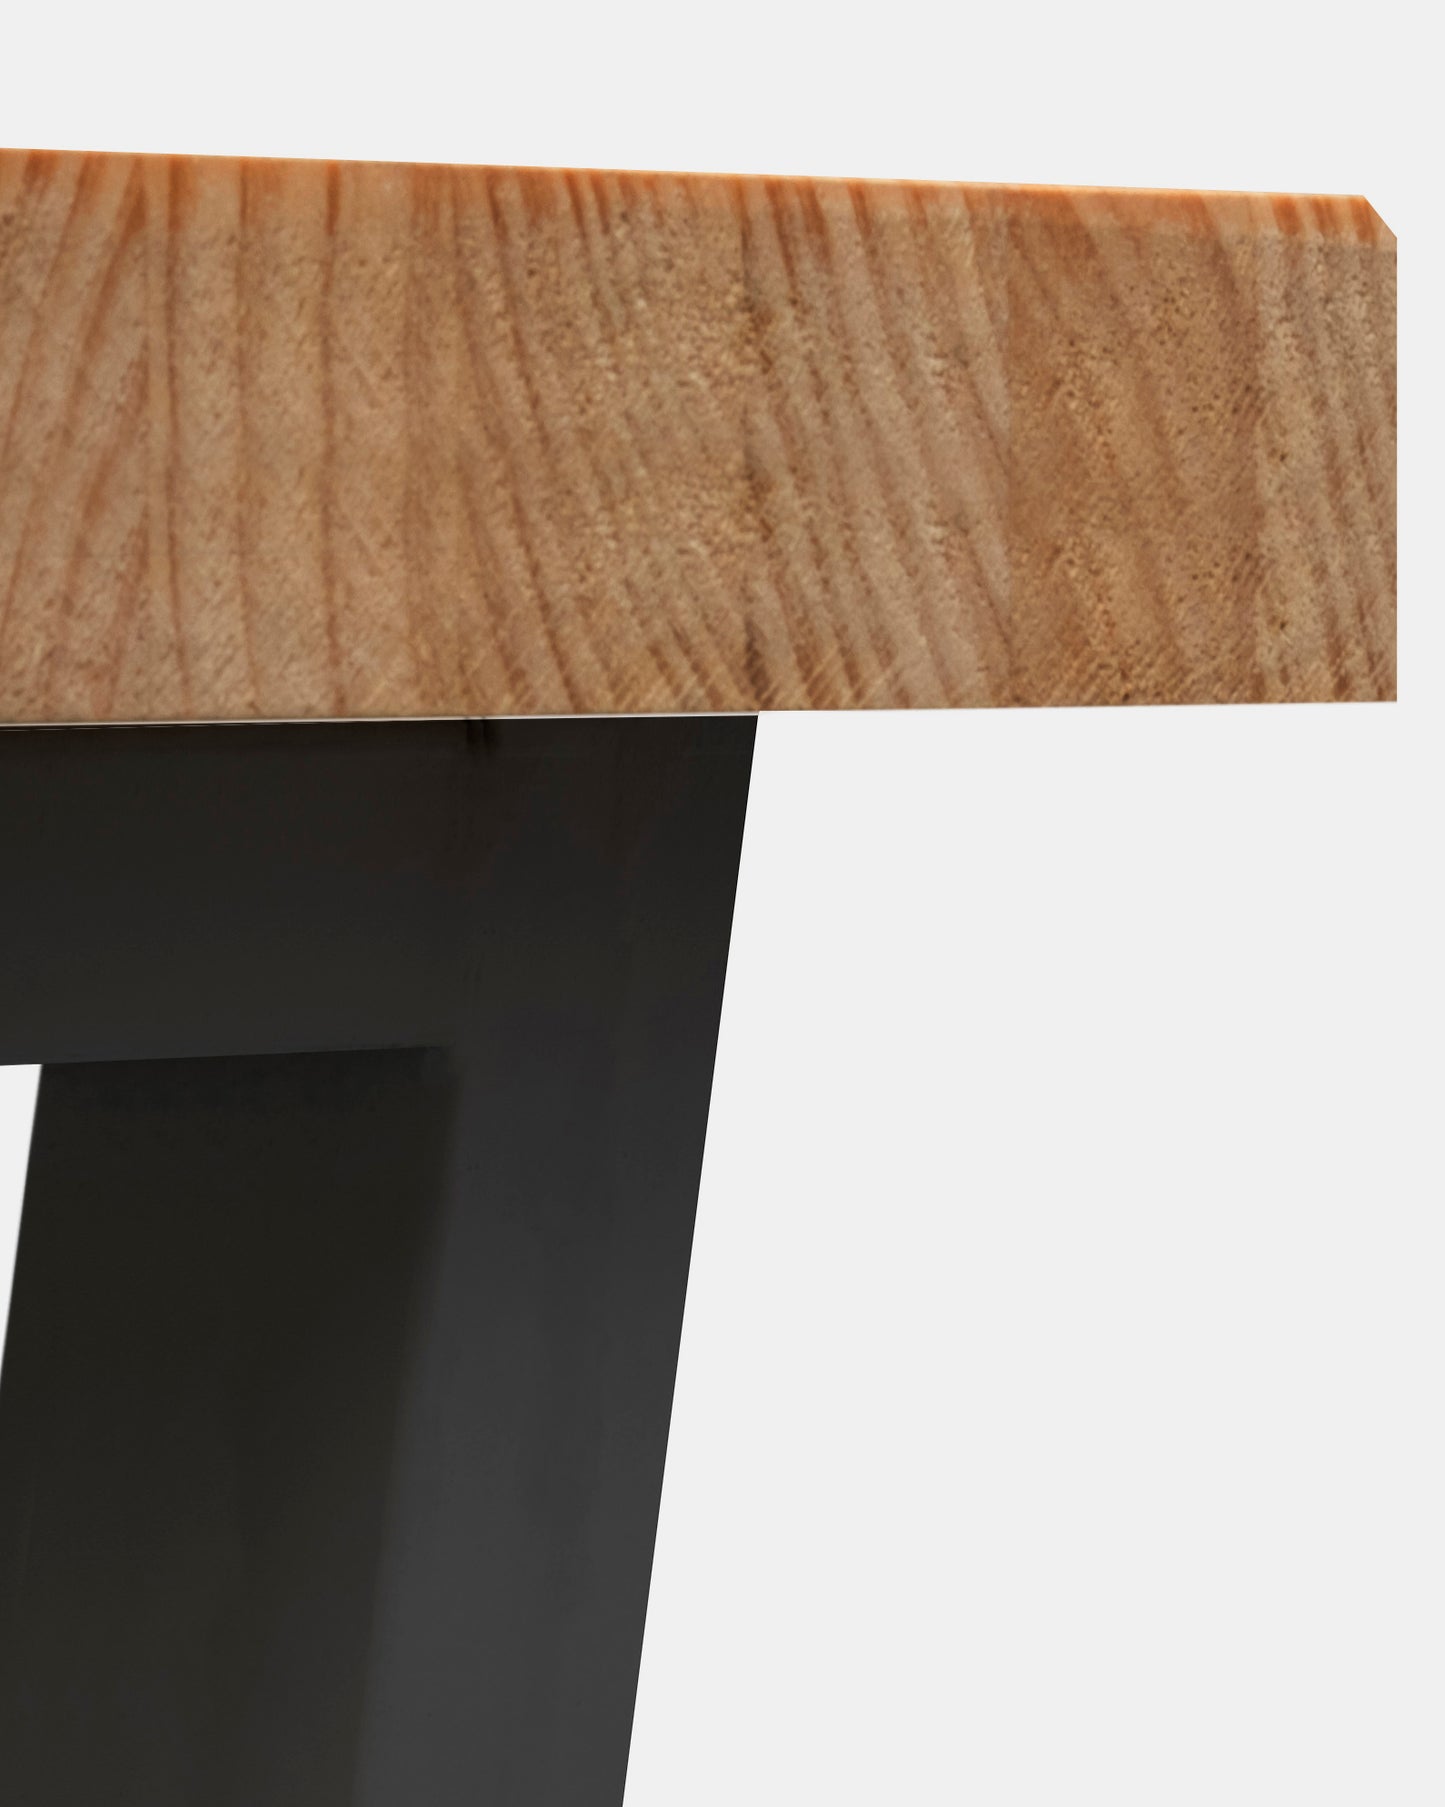 Banco de madera maciza acabado roble oscuro con patas de hierro negras de 120cm - DECOWOOD